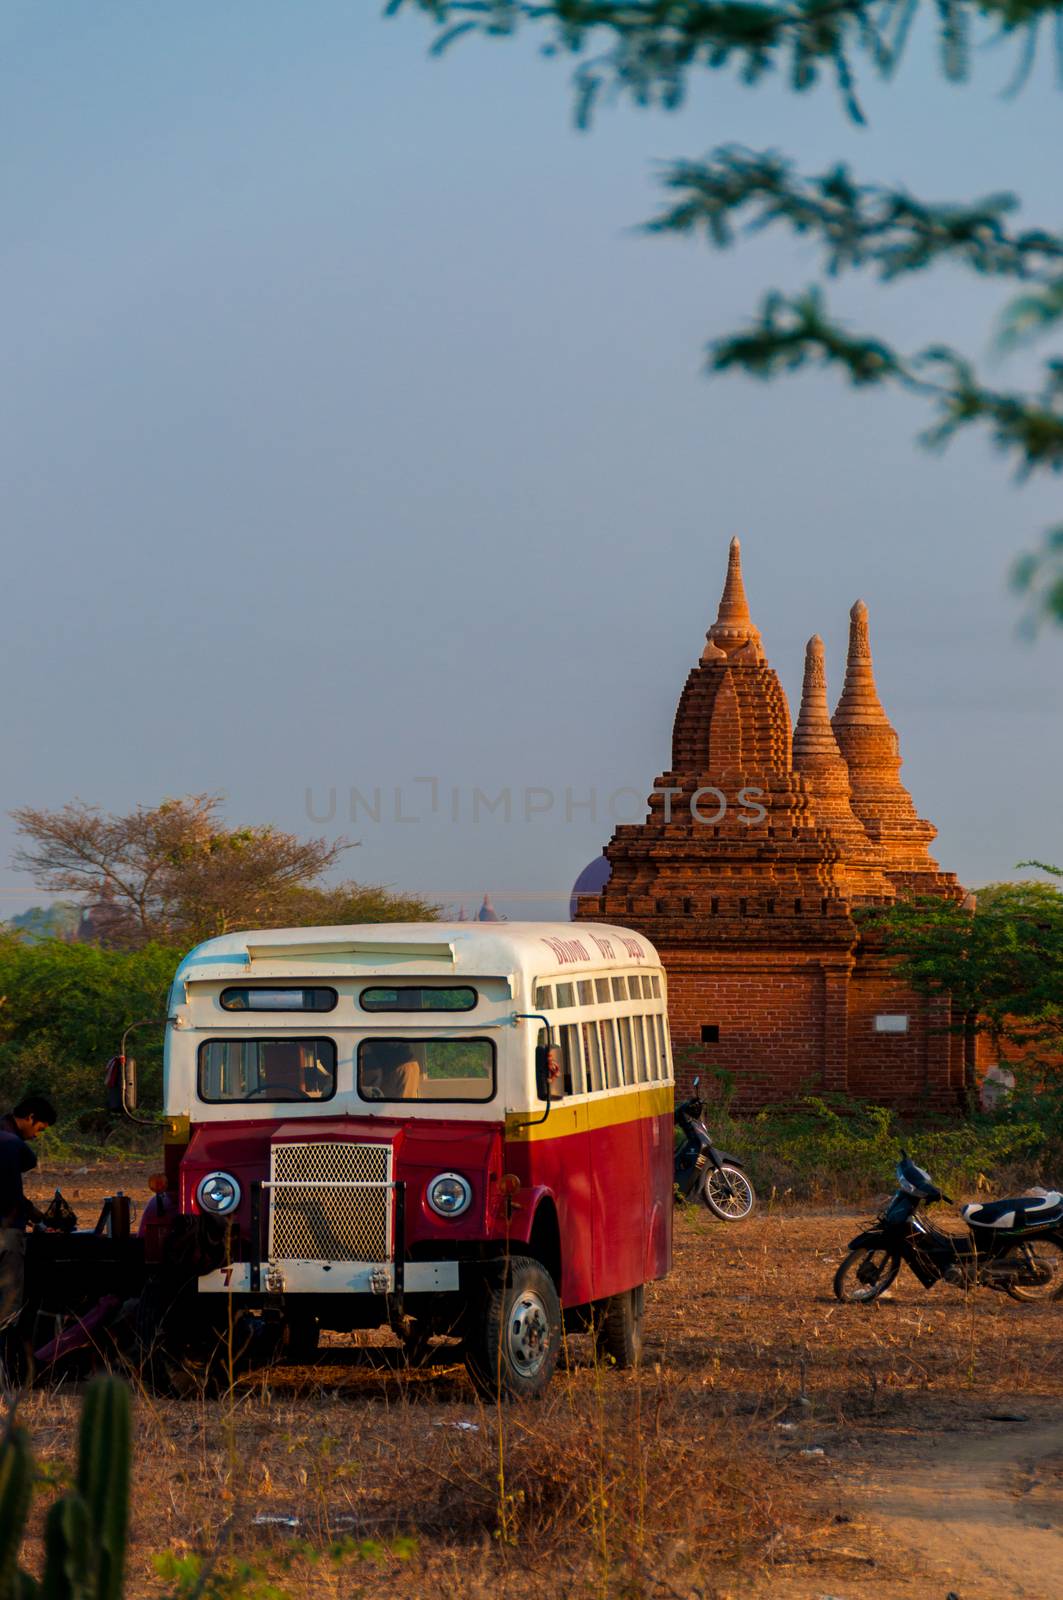 Bus Pagoda Stupa  Bagan in Myanmar Burma